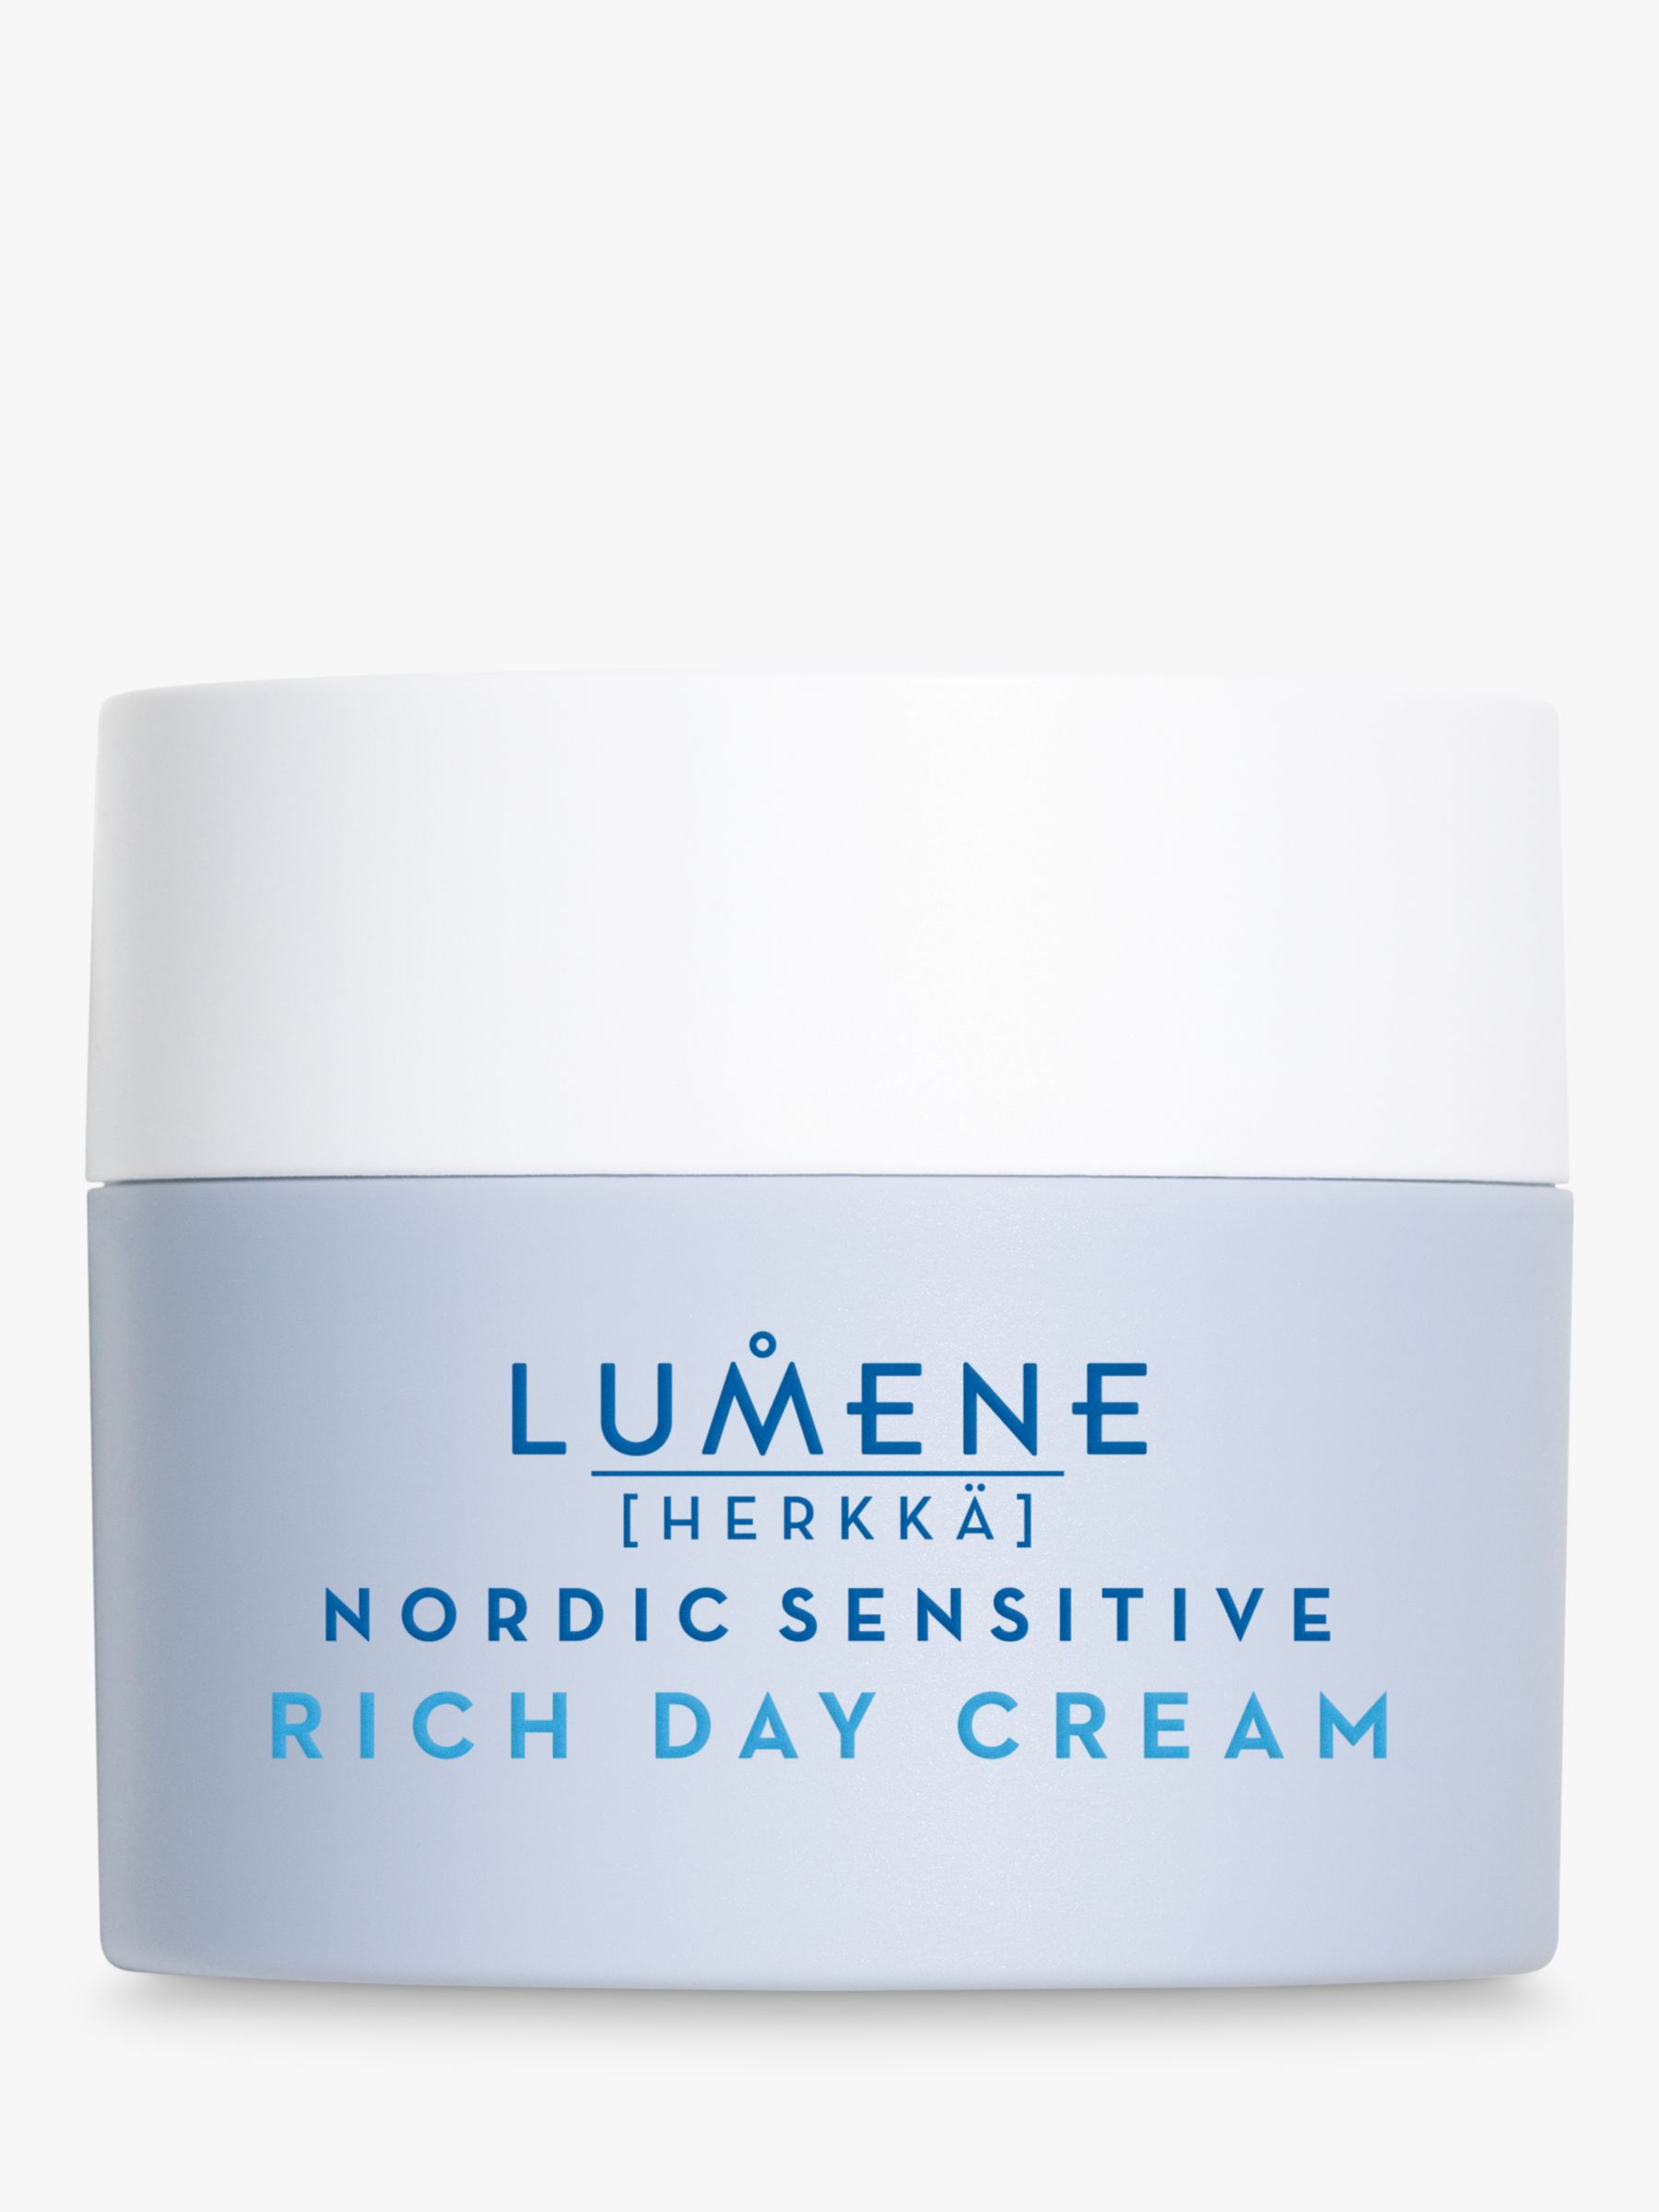 Lumene Nordic Sensitive Herkka Rich Day Cream, 50ml 1